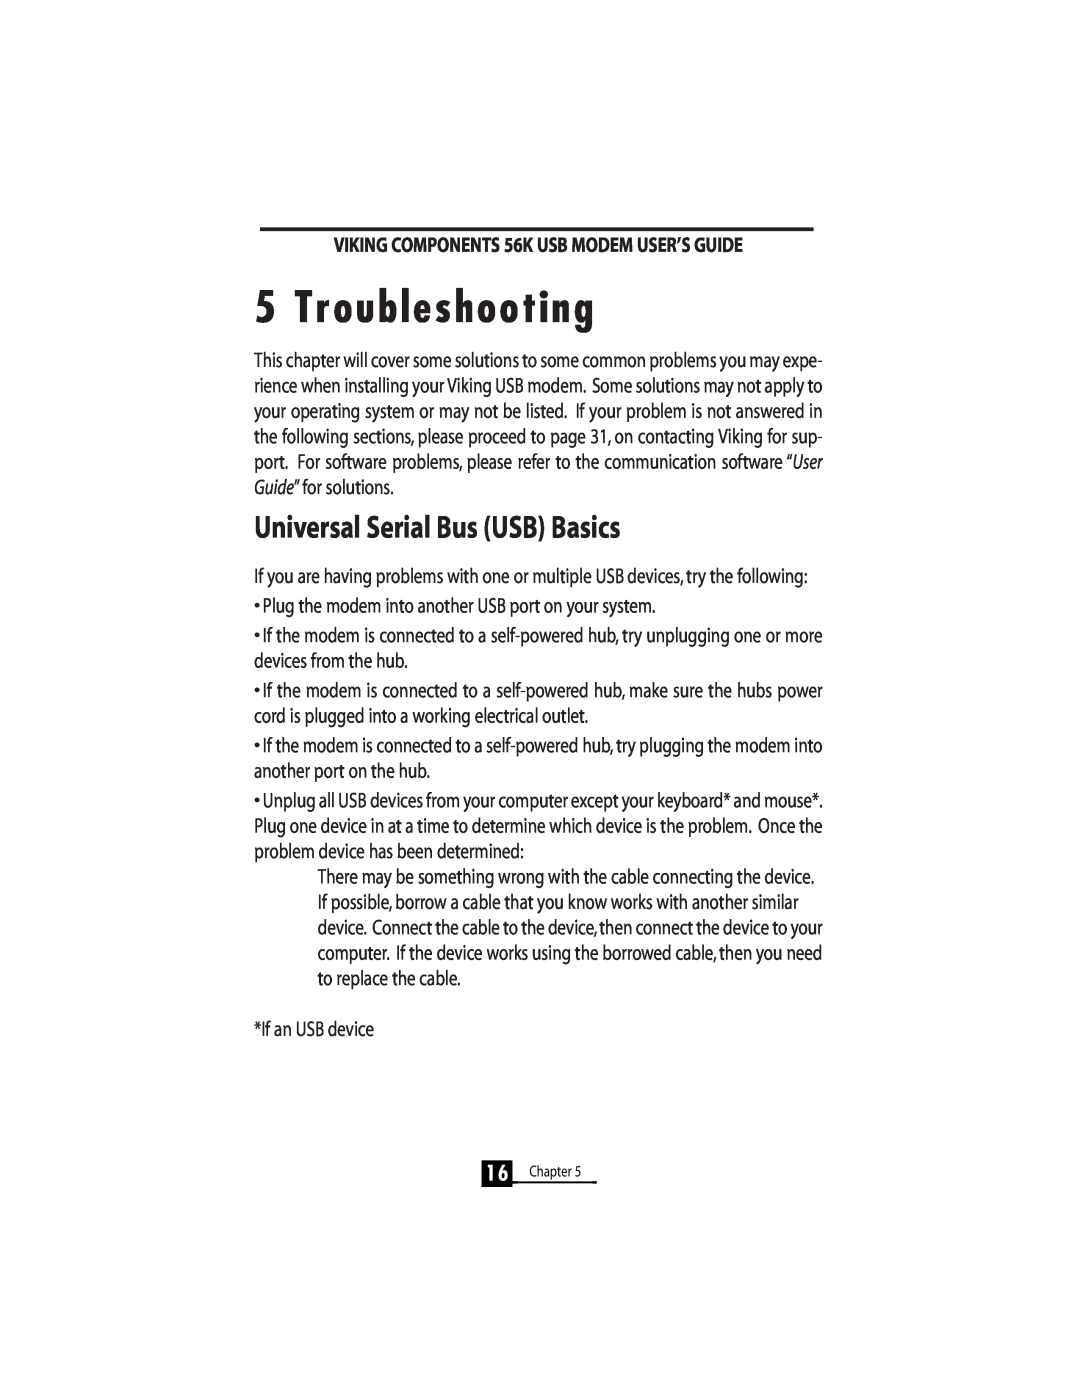 Viking InterWorks 56K manual Troubleshooting, Universal Serial Bus USB Basics 